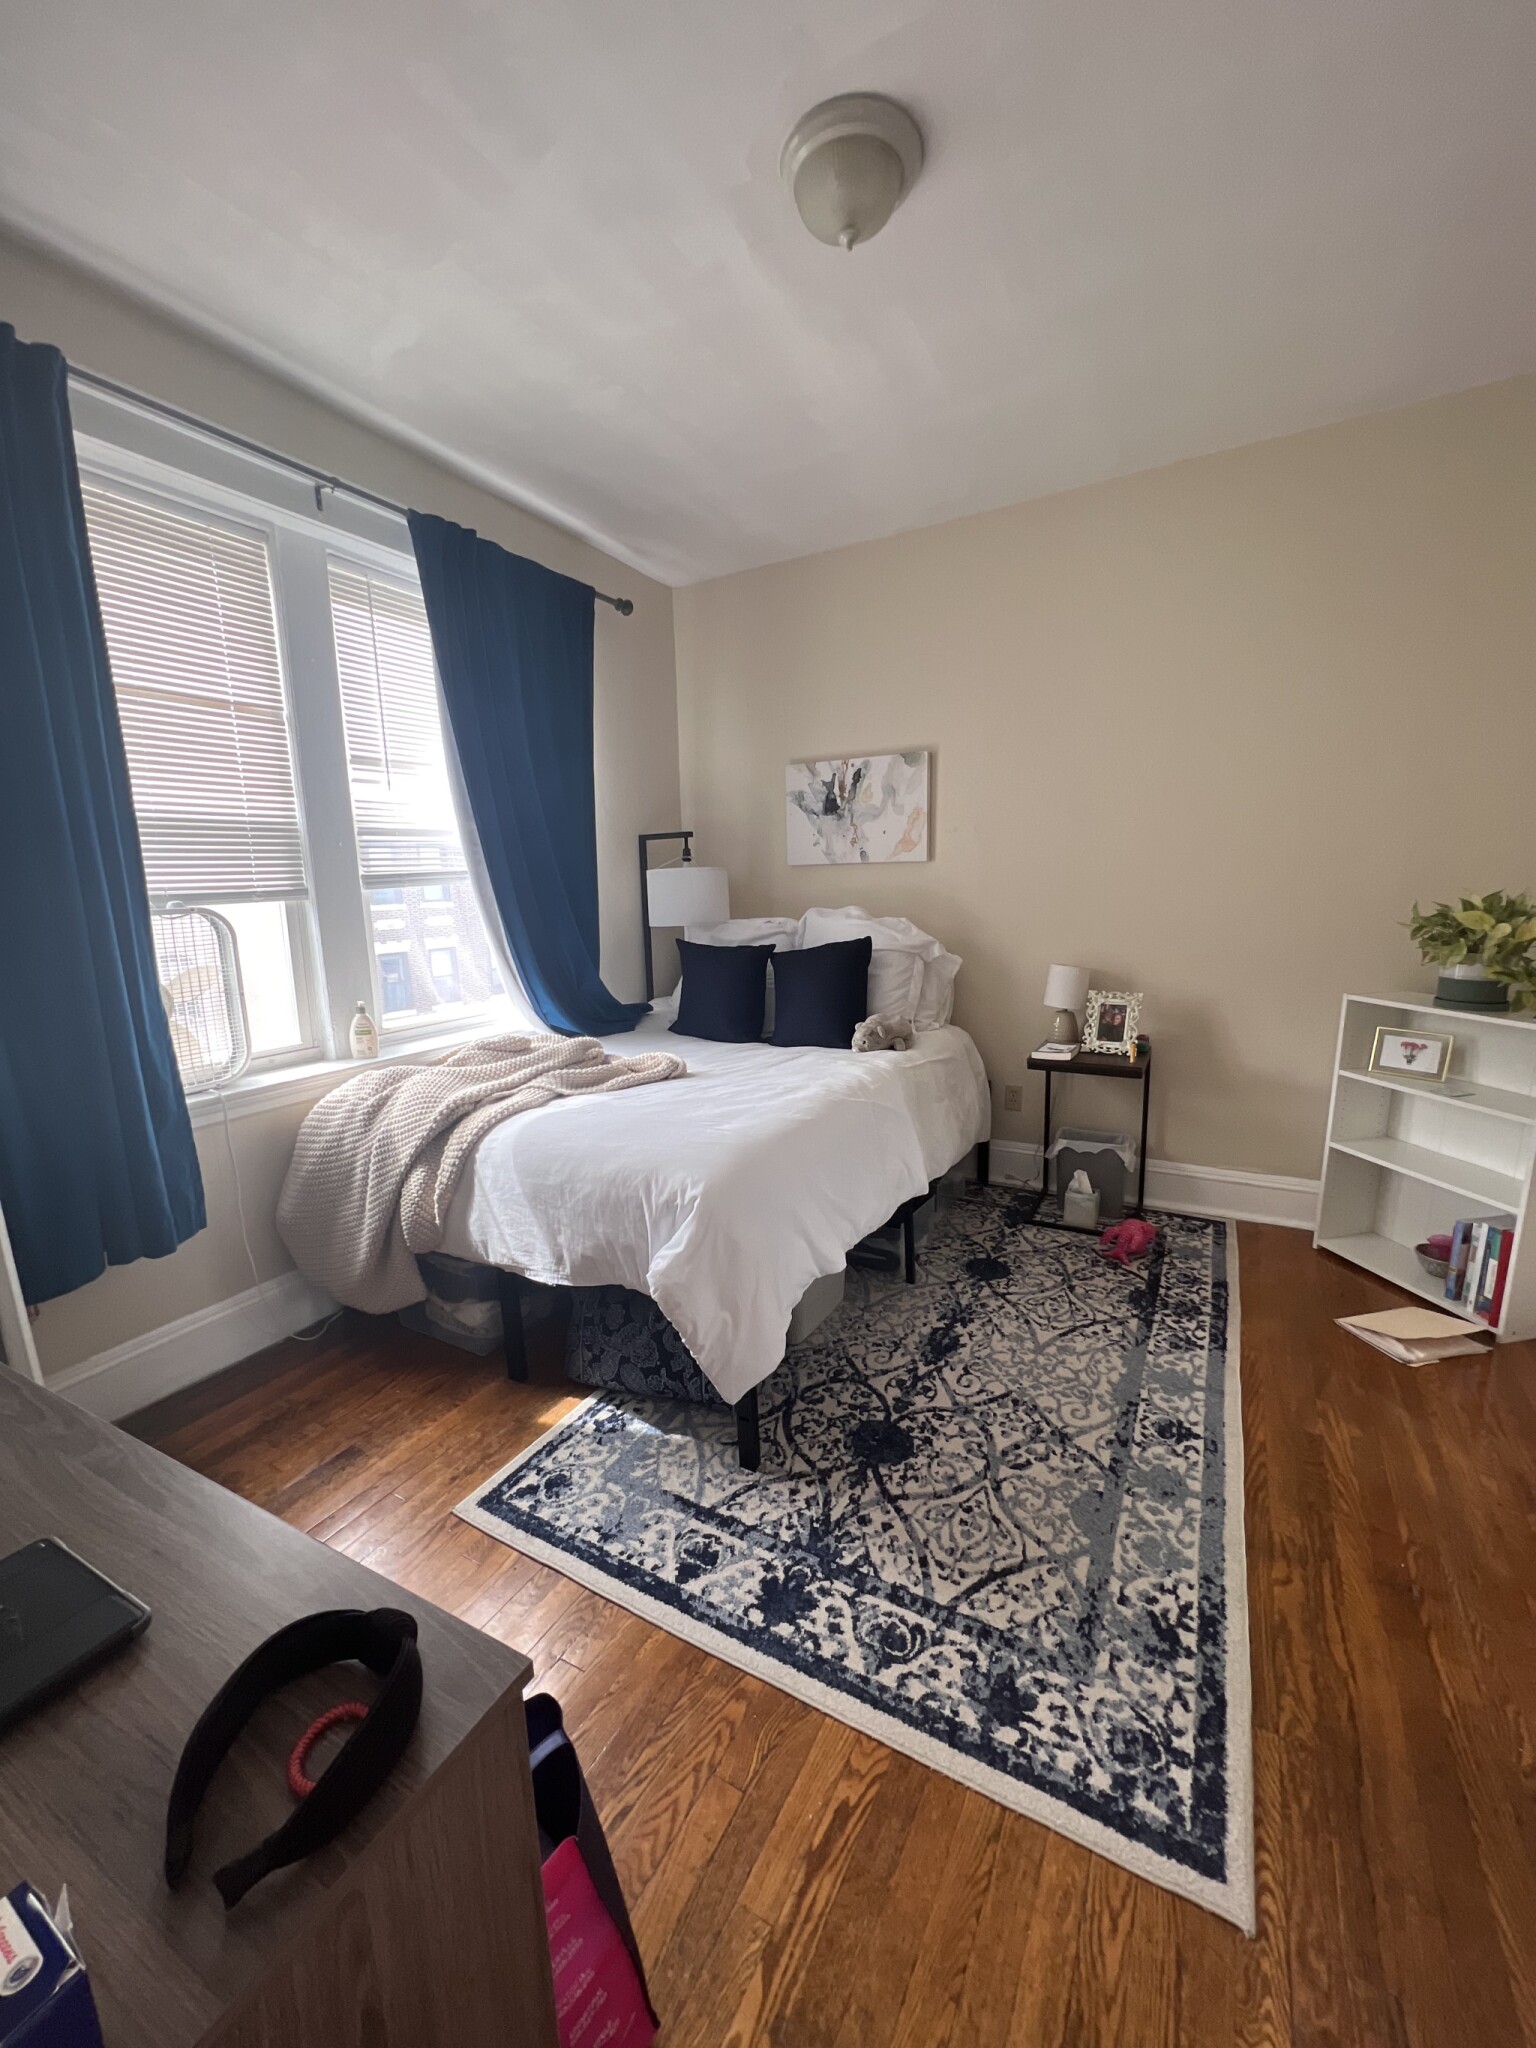 Photos of apartment on Summit Ave.,Boston MA 02135